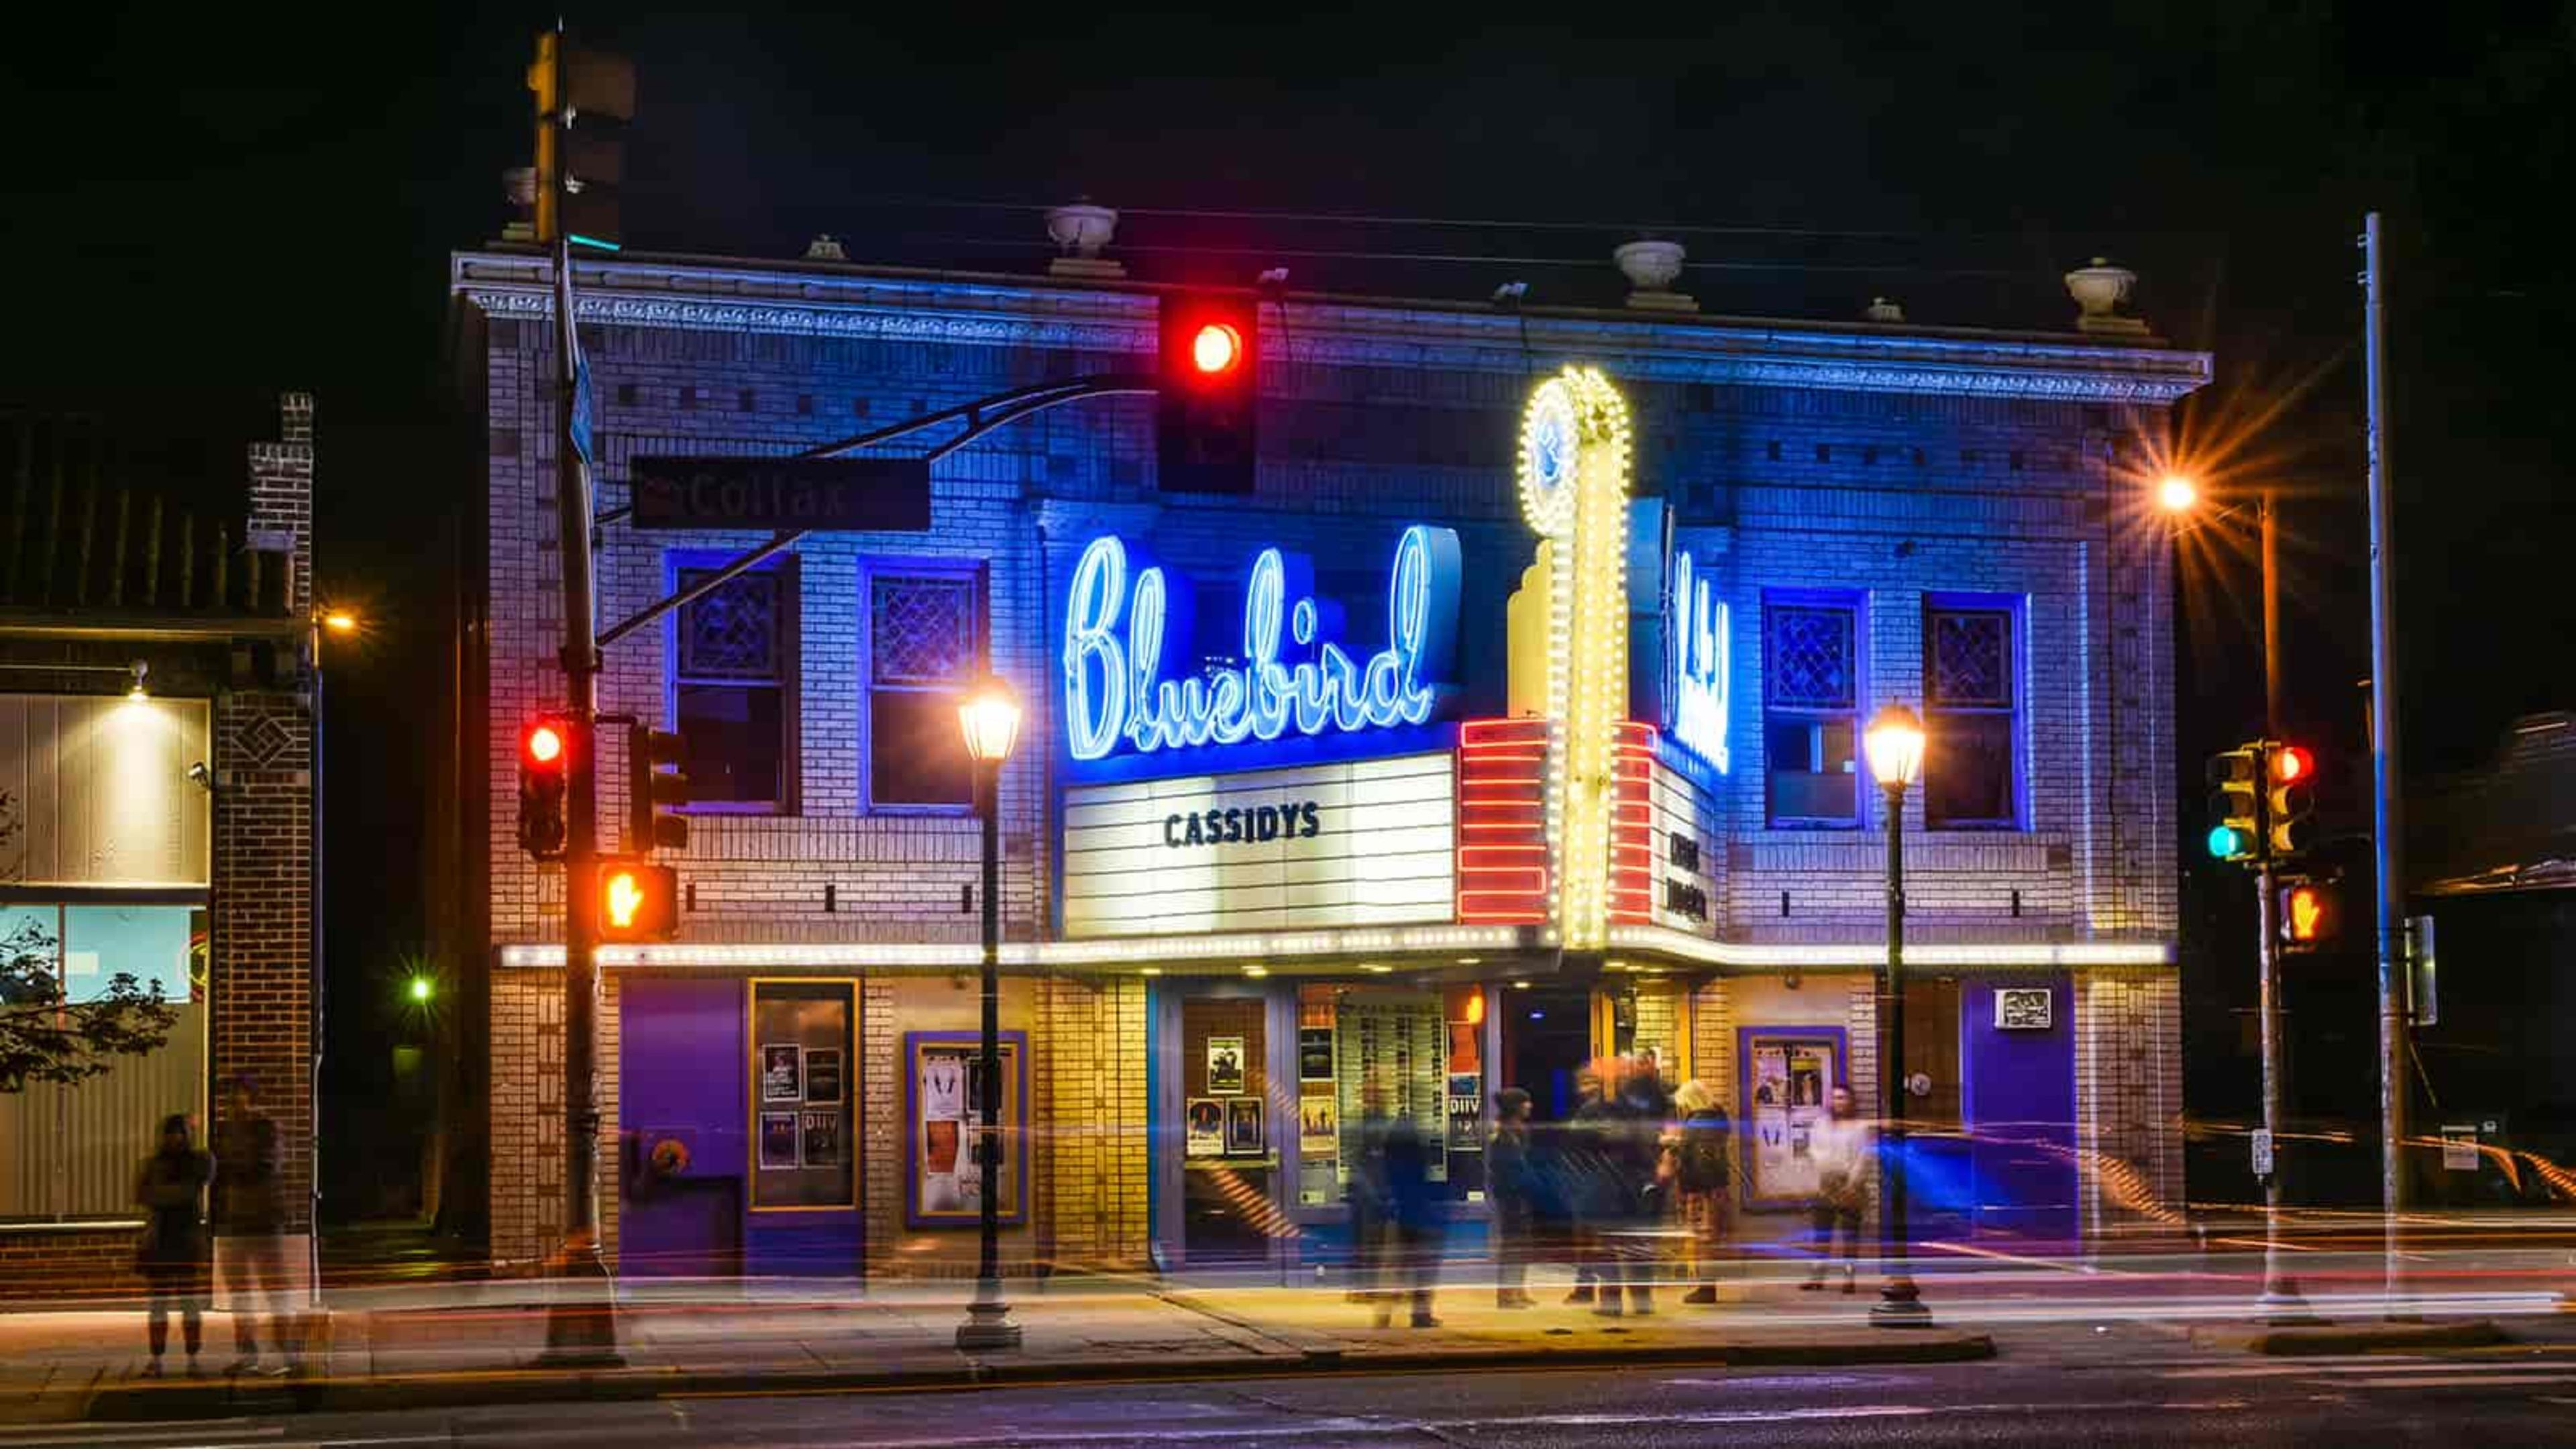 Bluebird Theater